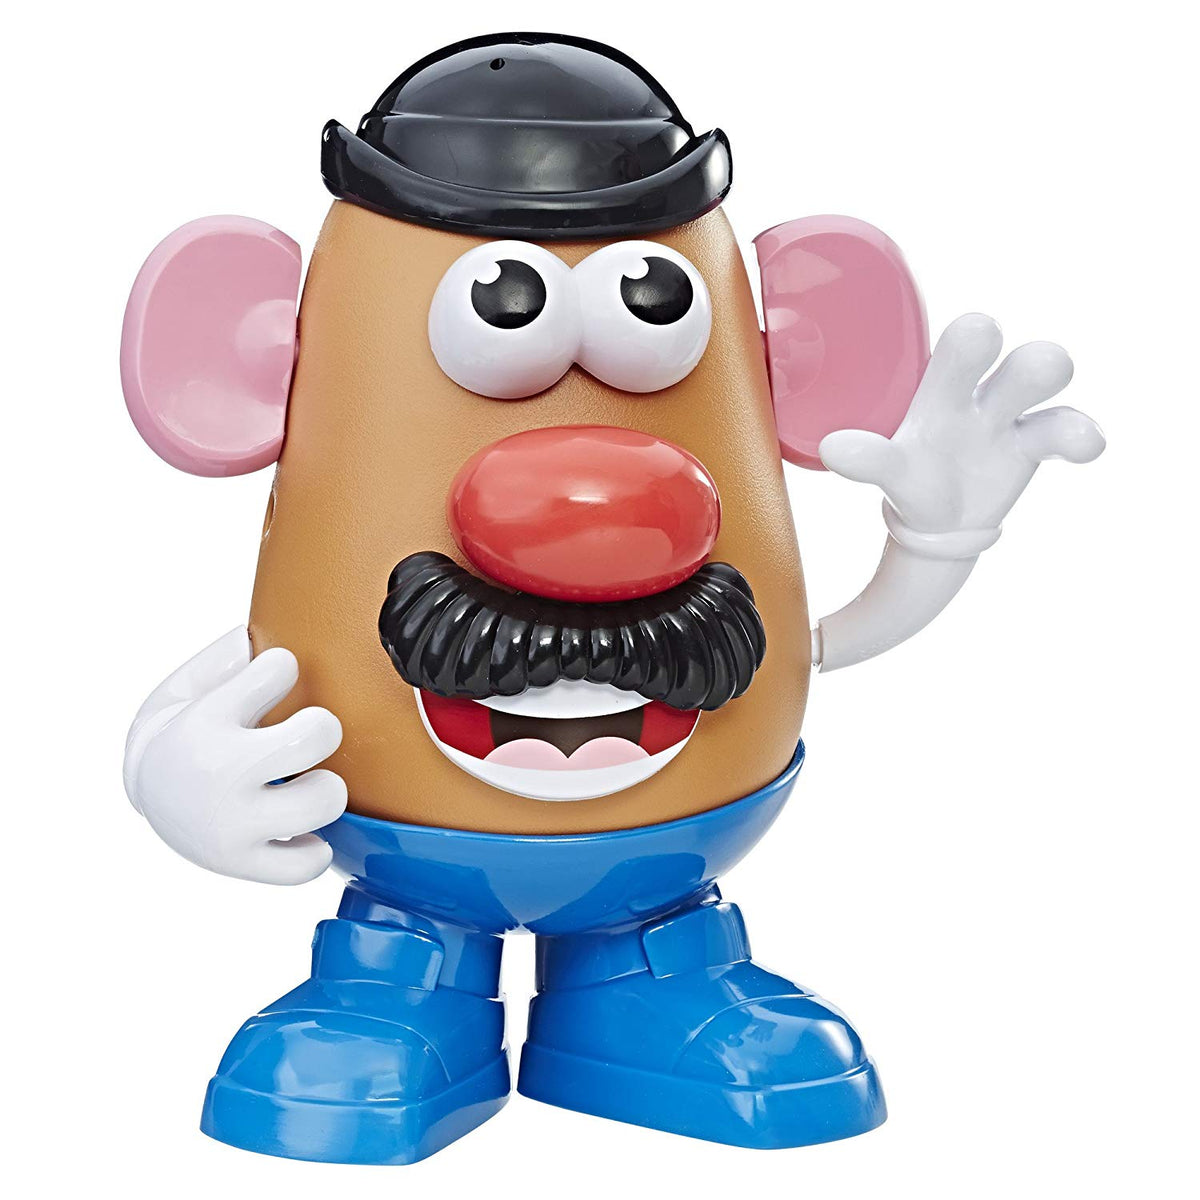 toy story mr potato head figure